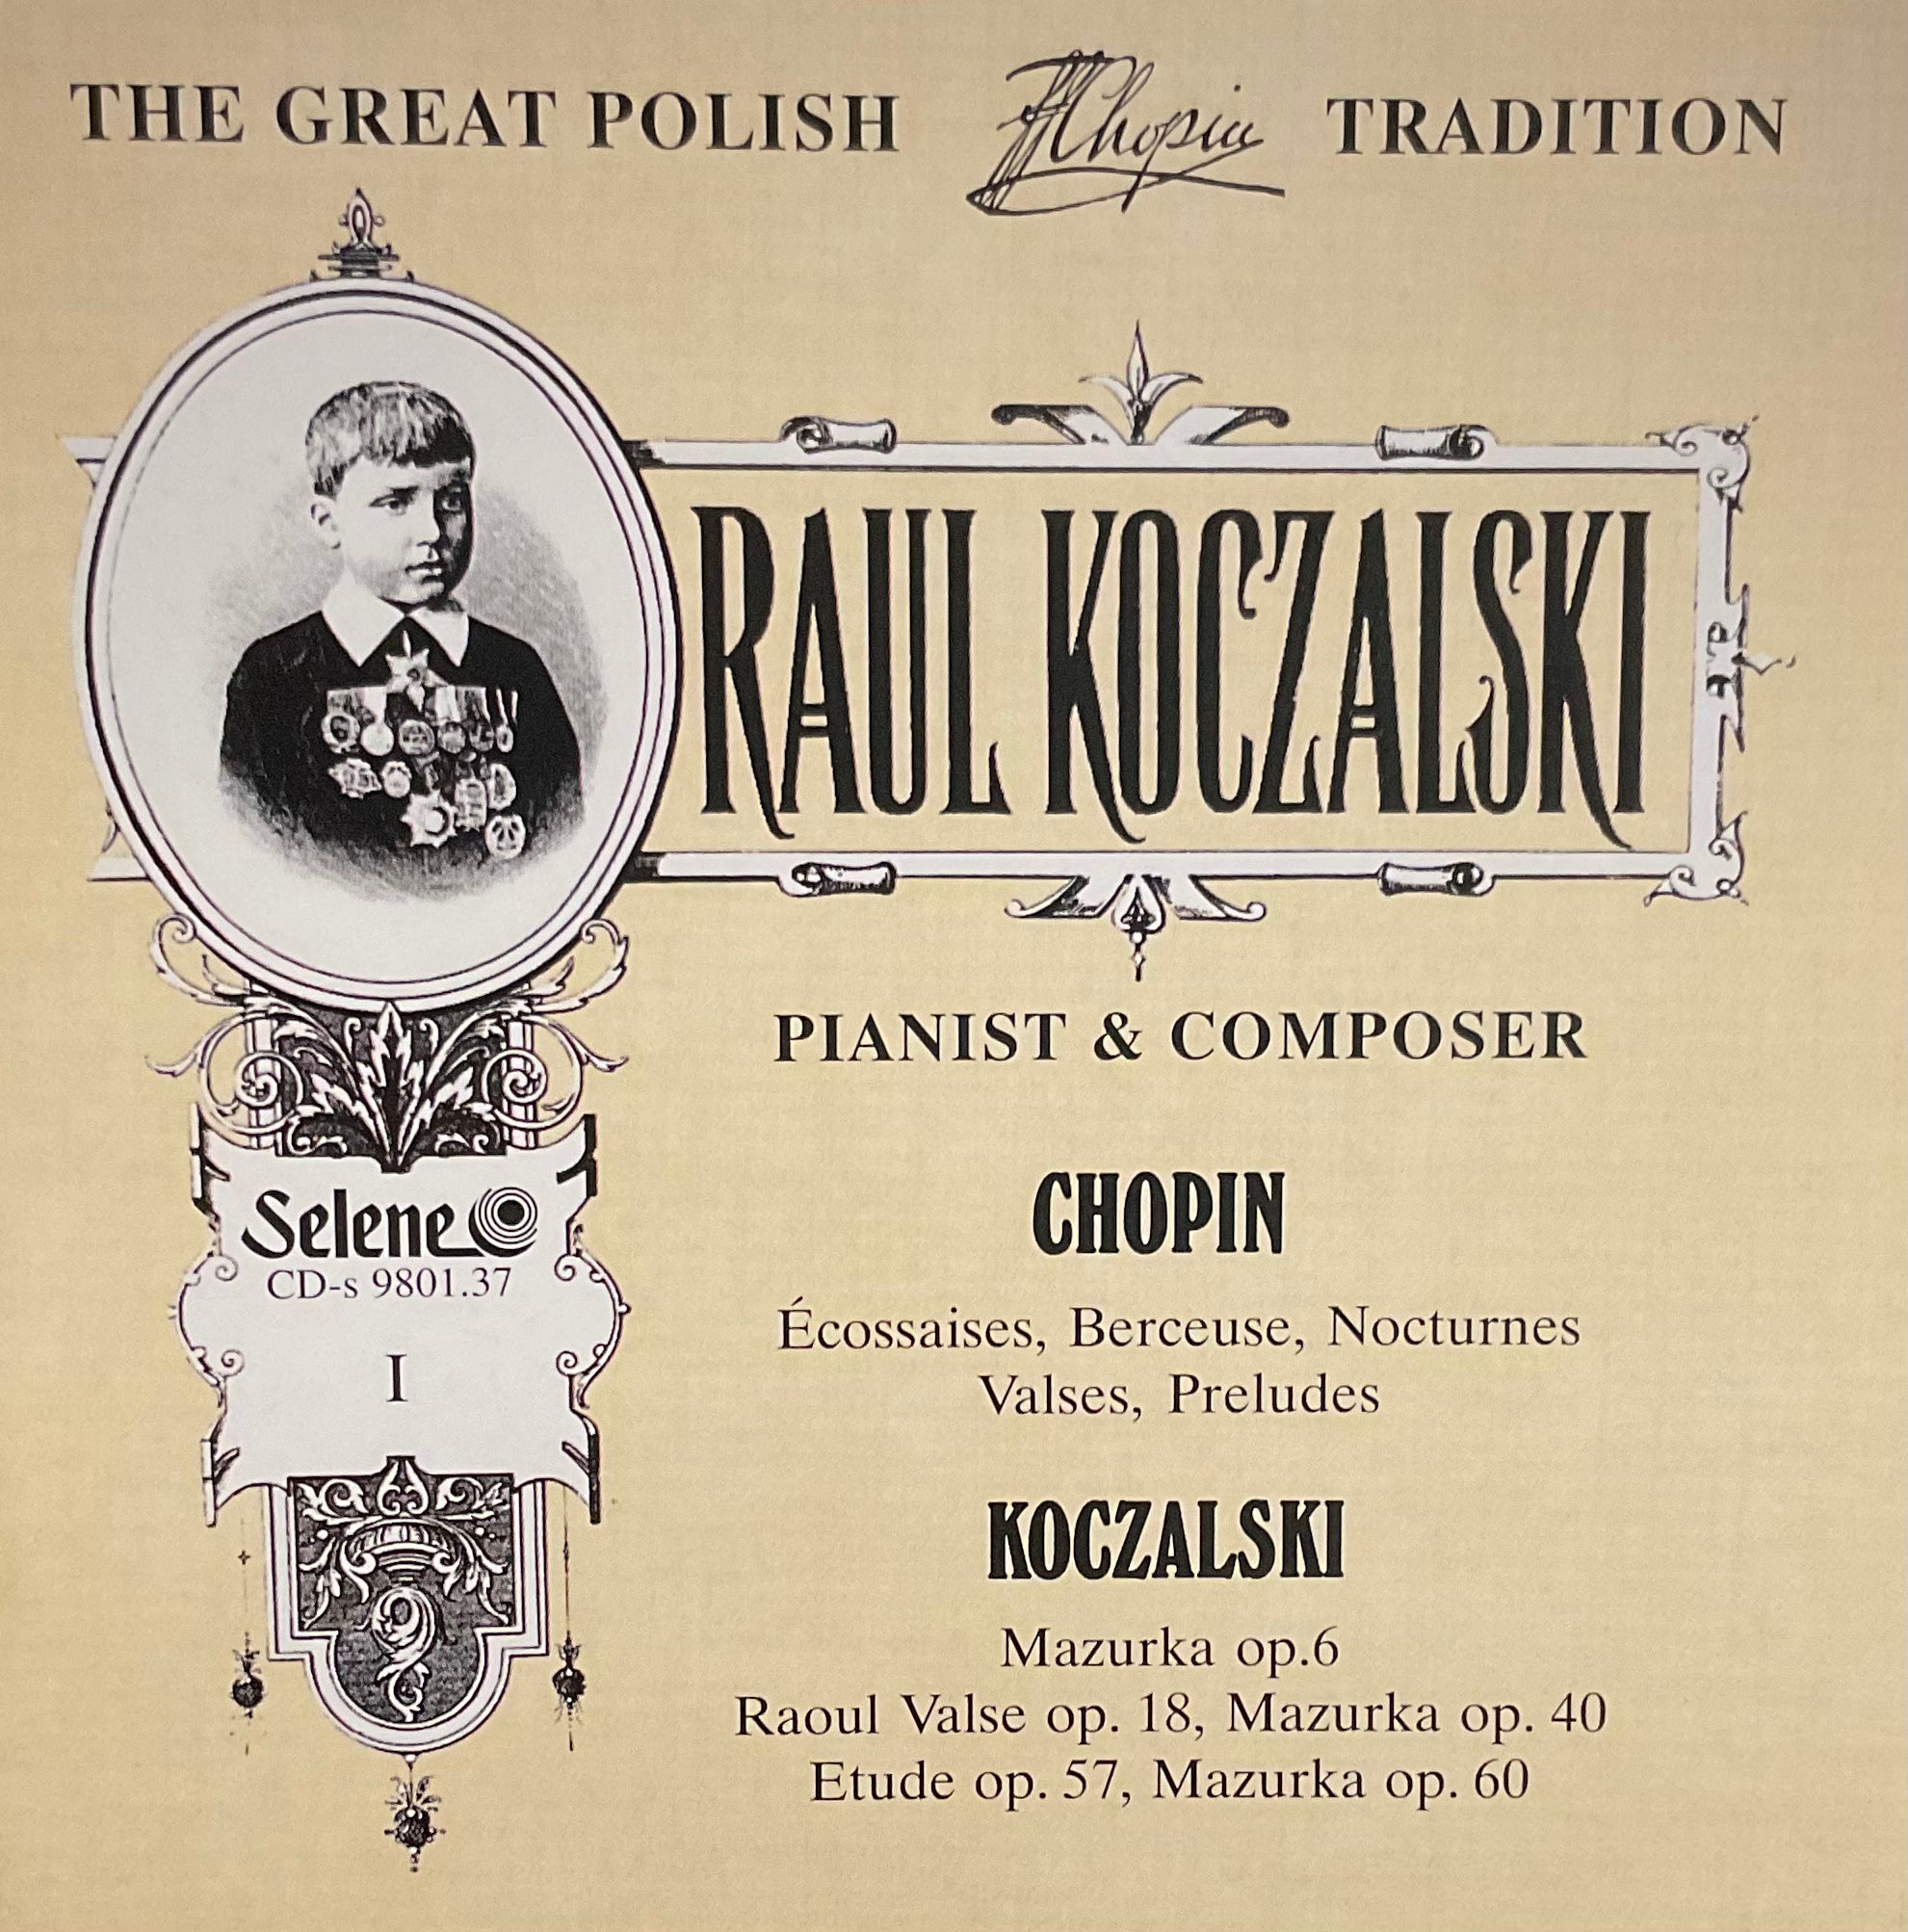 The Great Polish Chopin Tradition - Raul Koczalski vol I